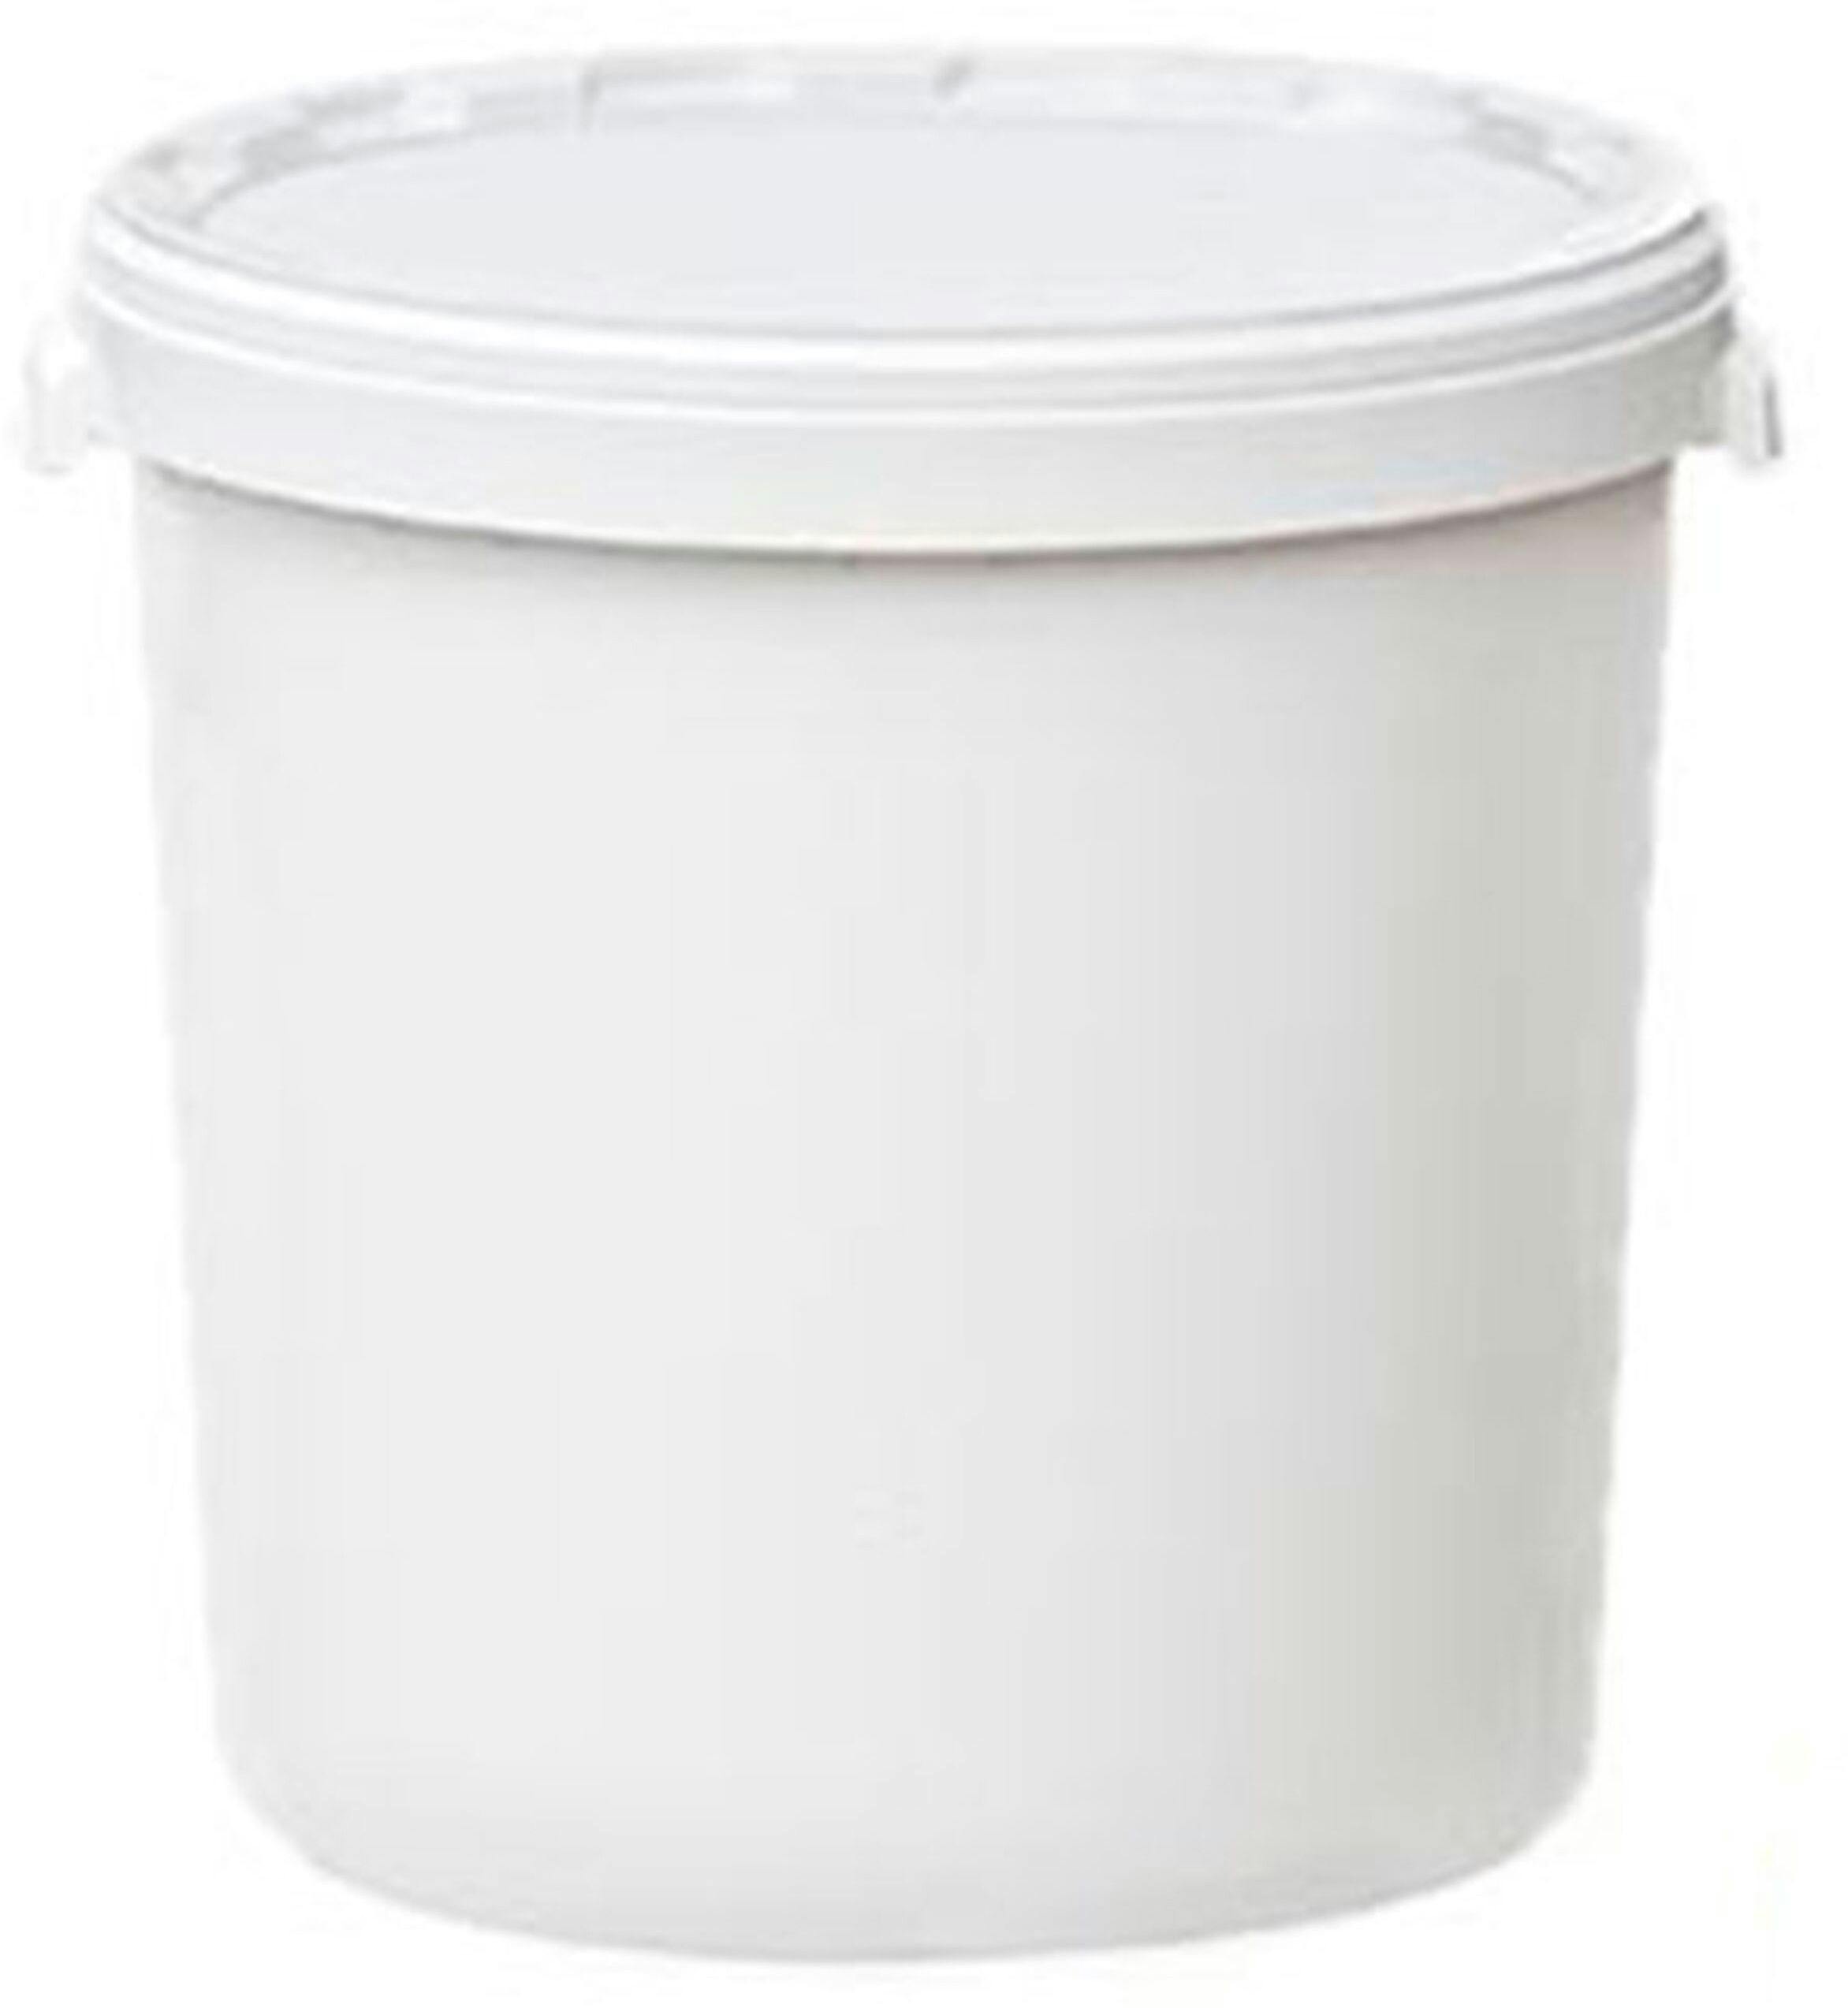 Plastic bucket 18 liters white